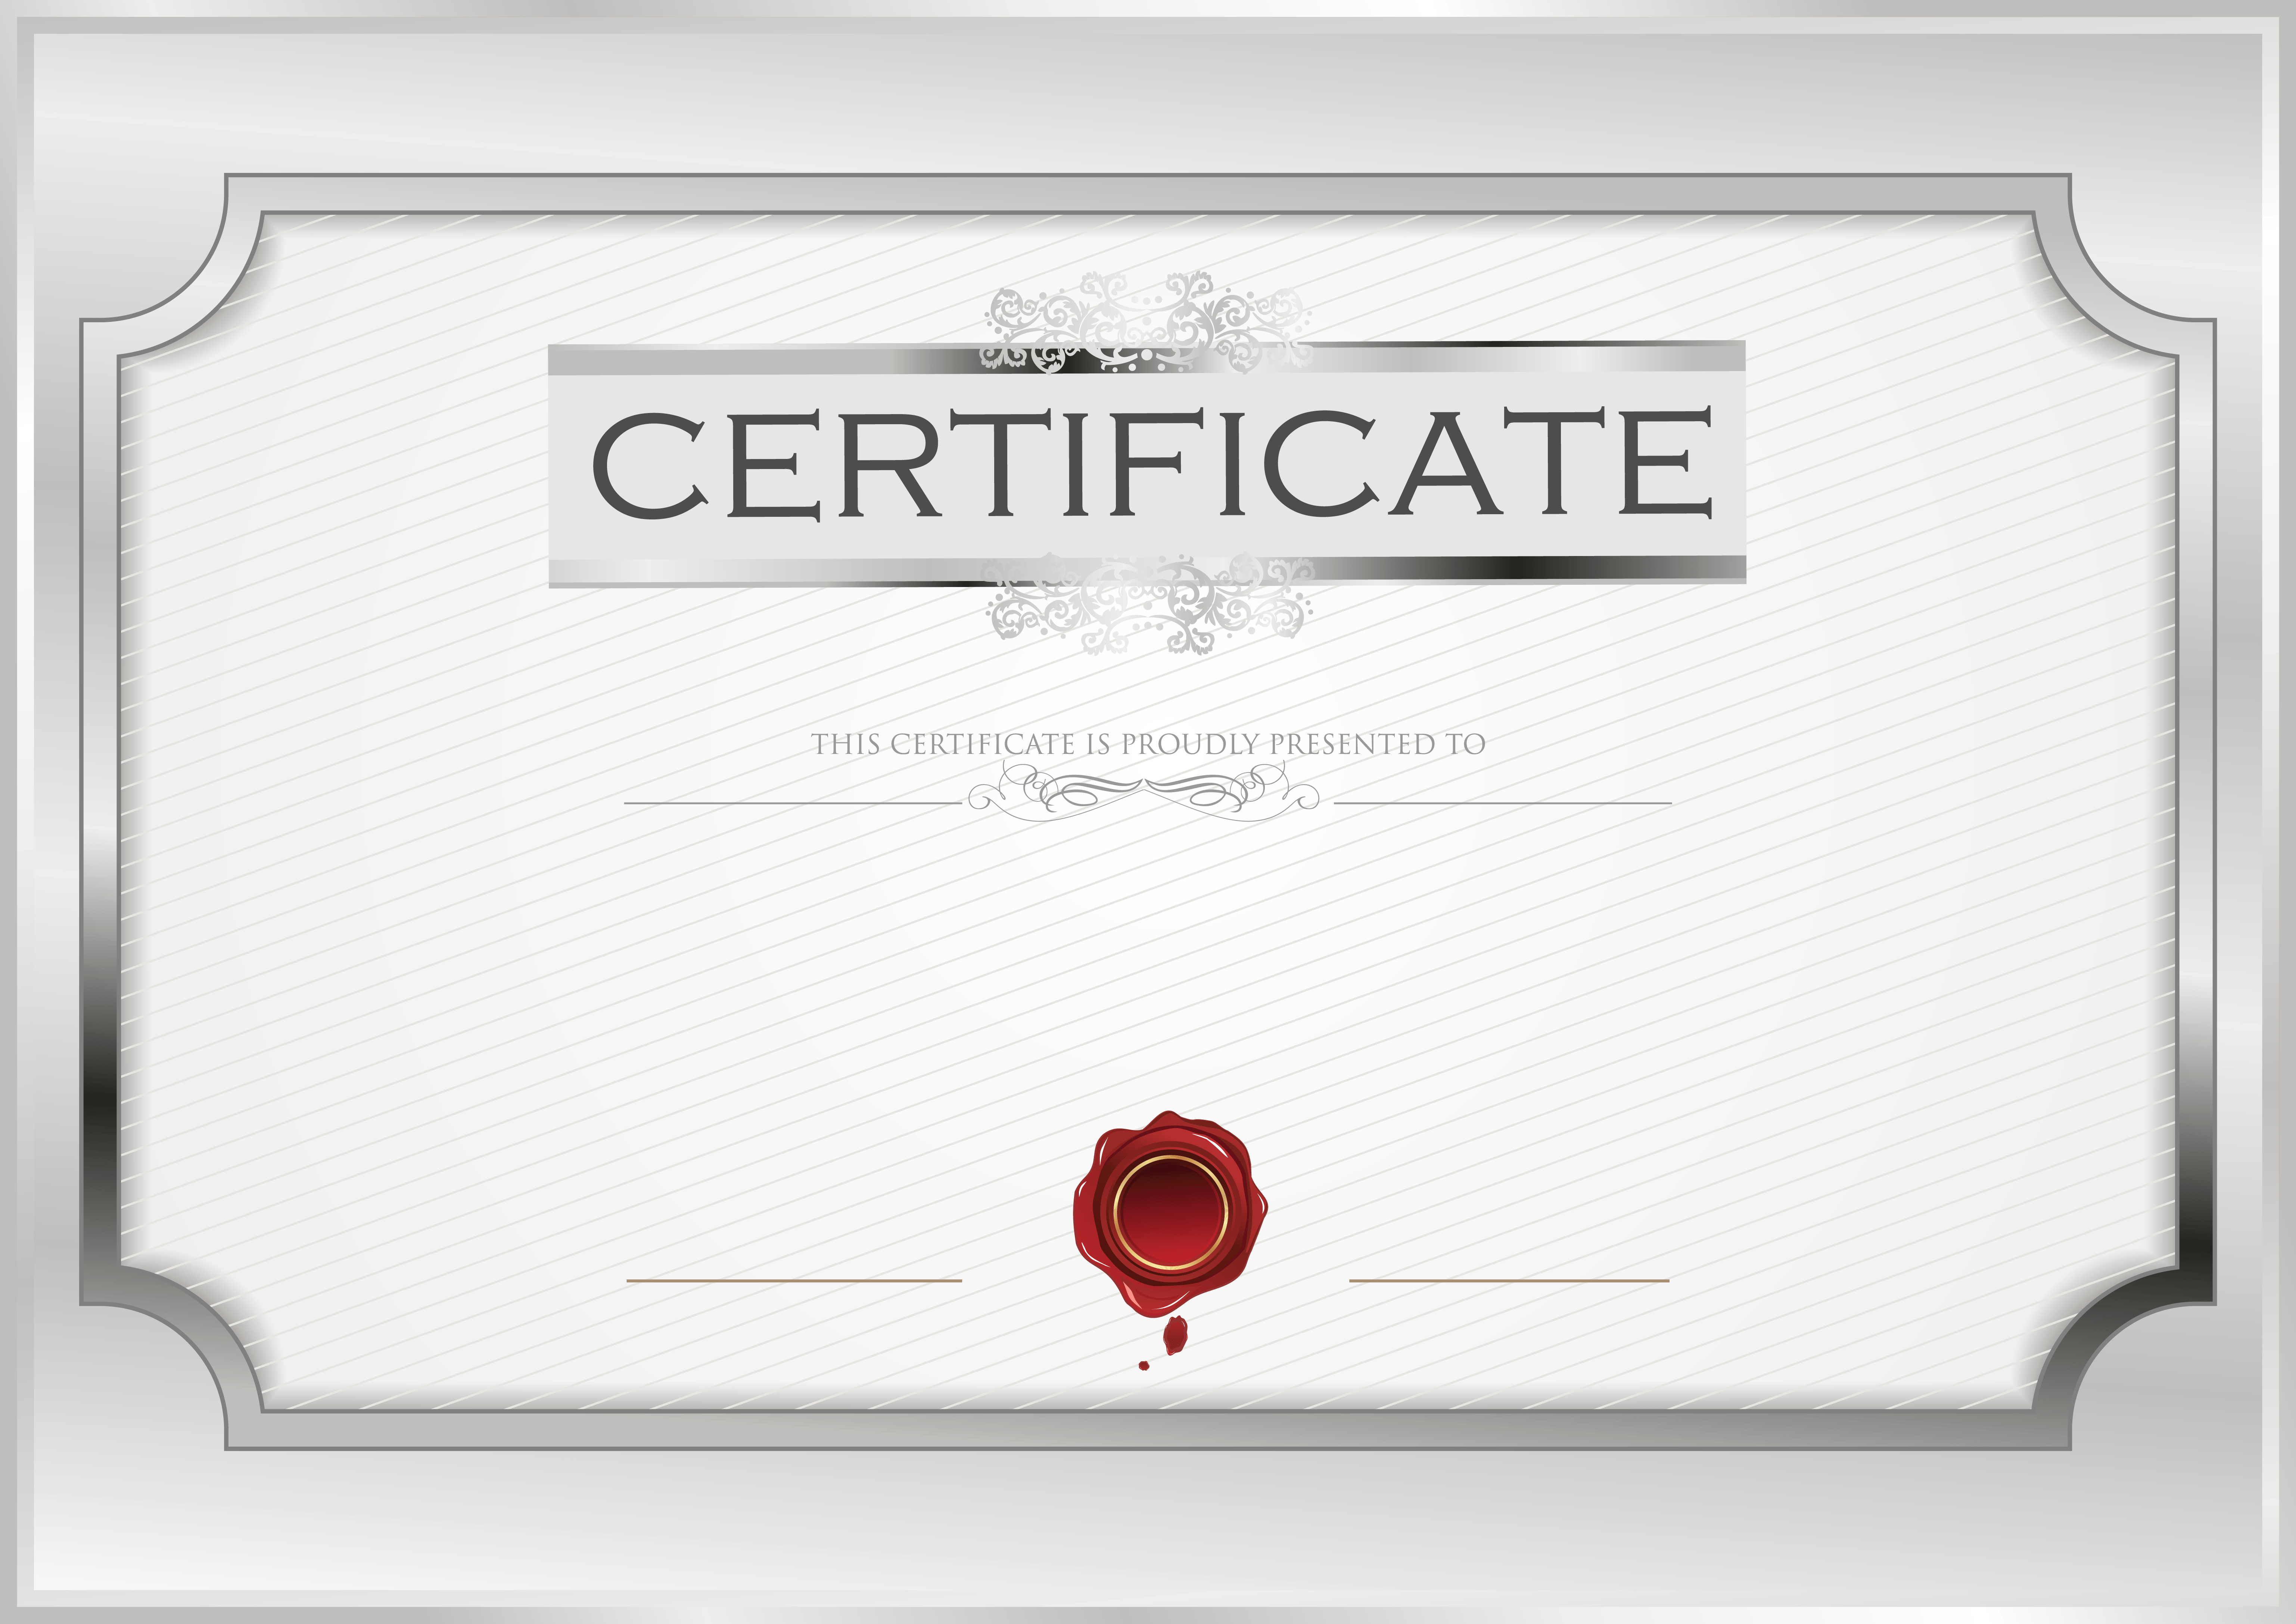 Certificate Blank Image